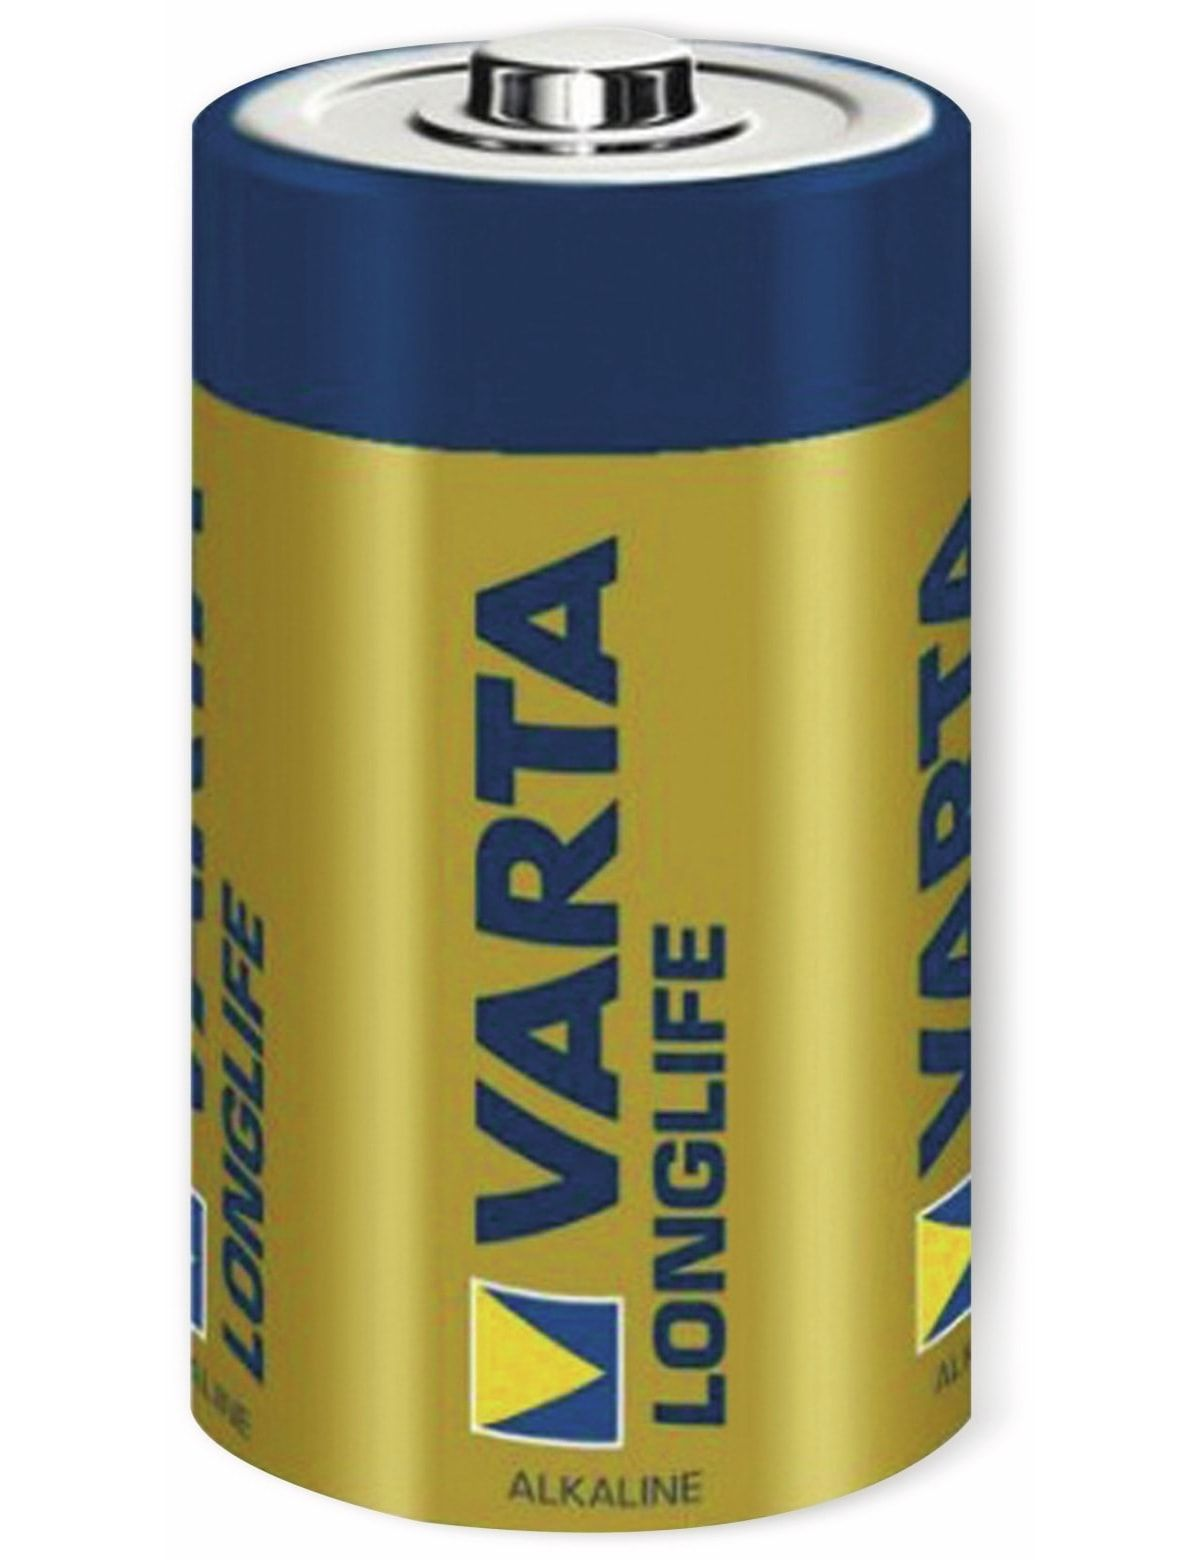 VARTA Longlife Baby Batterie (lose) 7.6 C 1.5 LR14 Batterie, 4114 Volt, Ah AlMn, AlMn